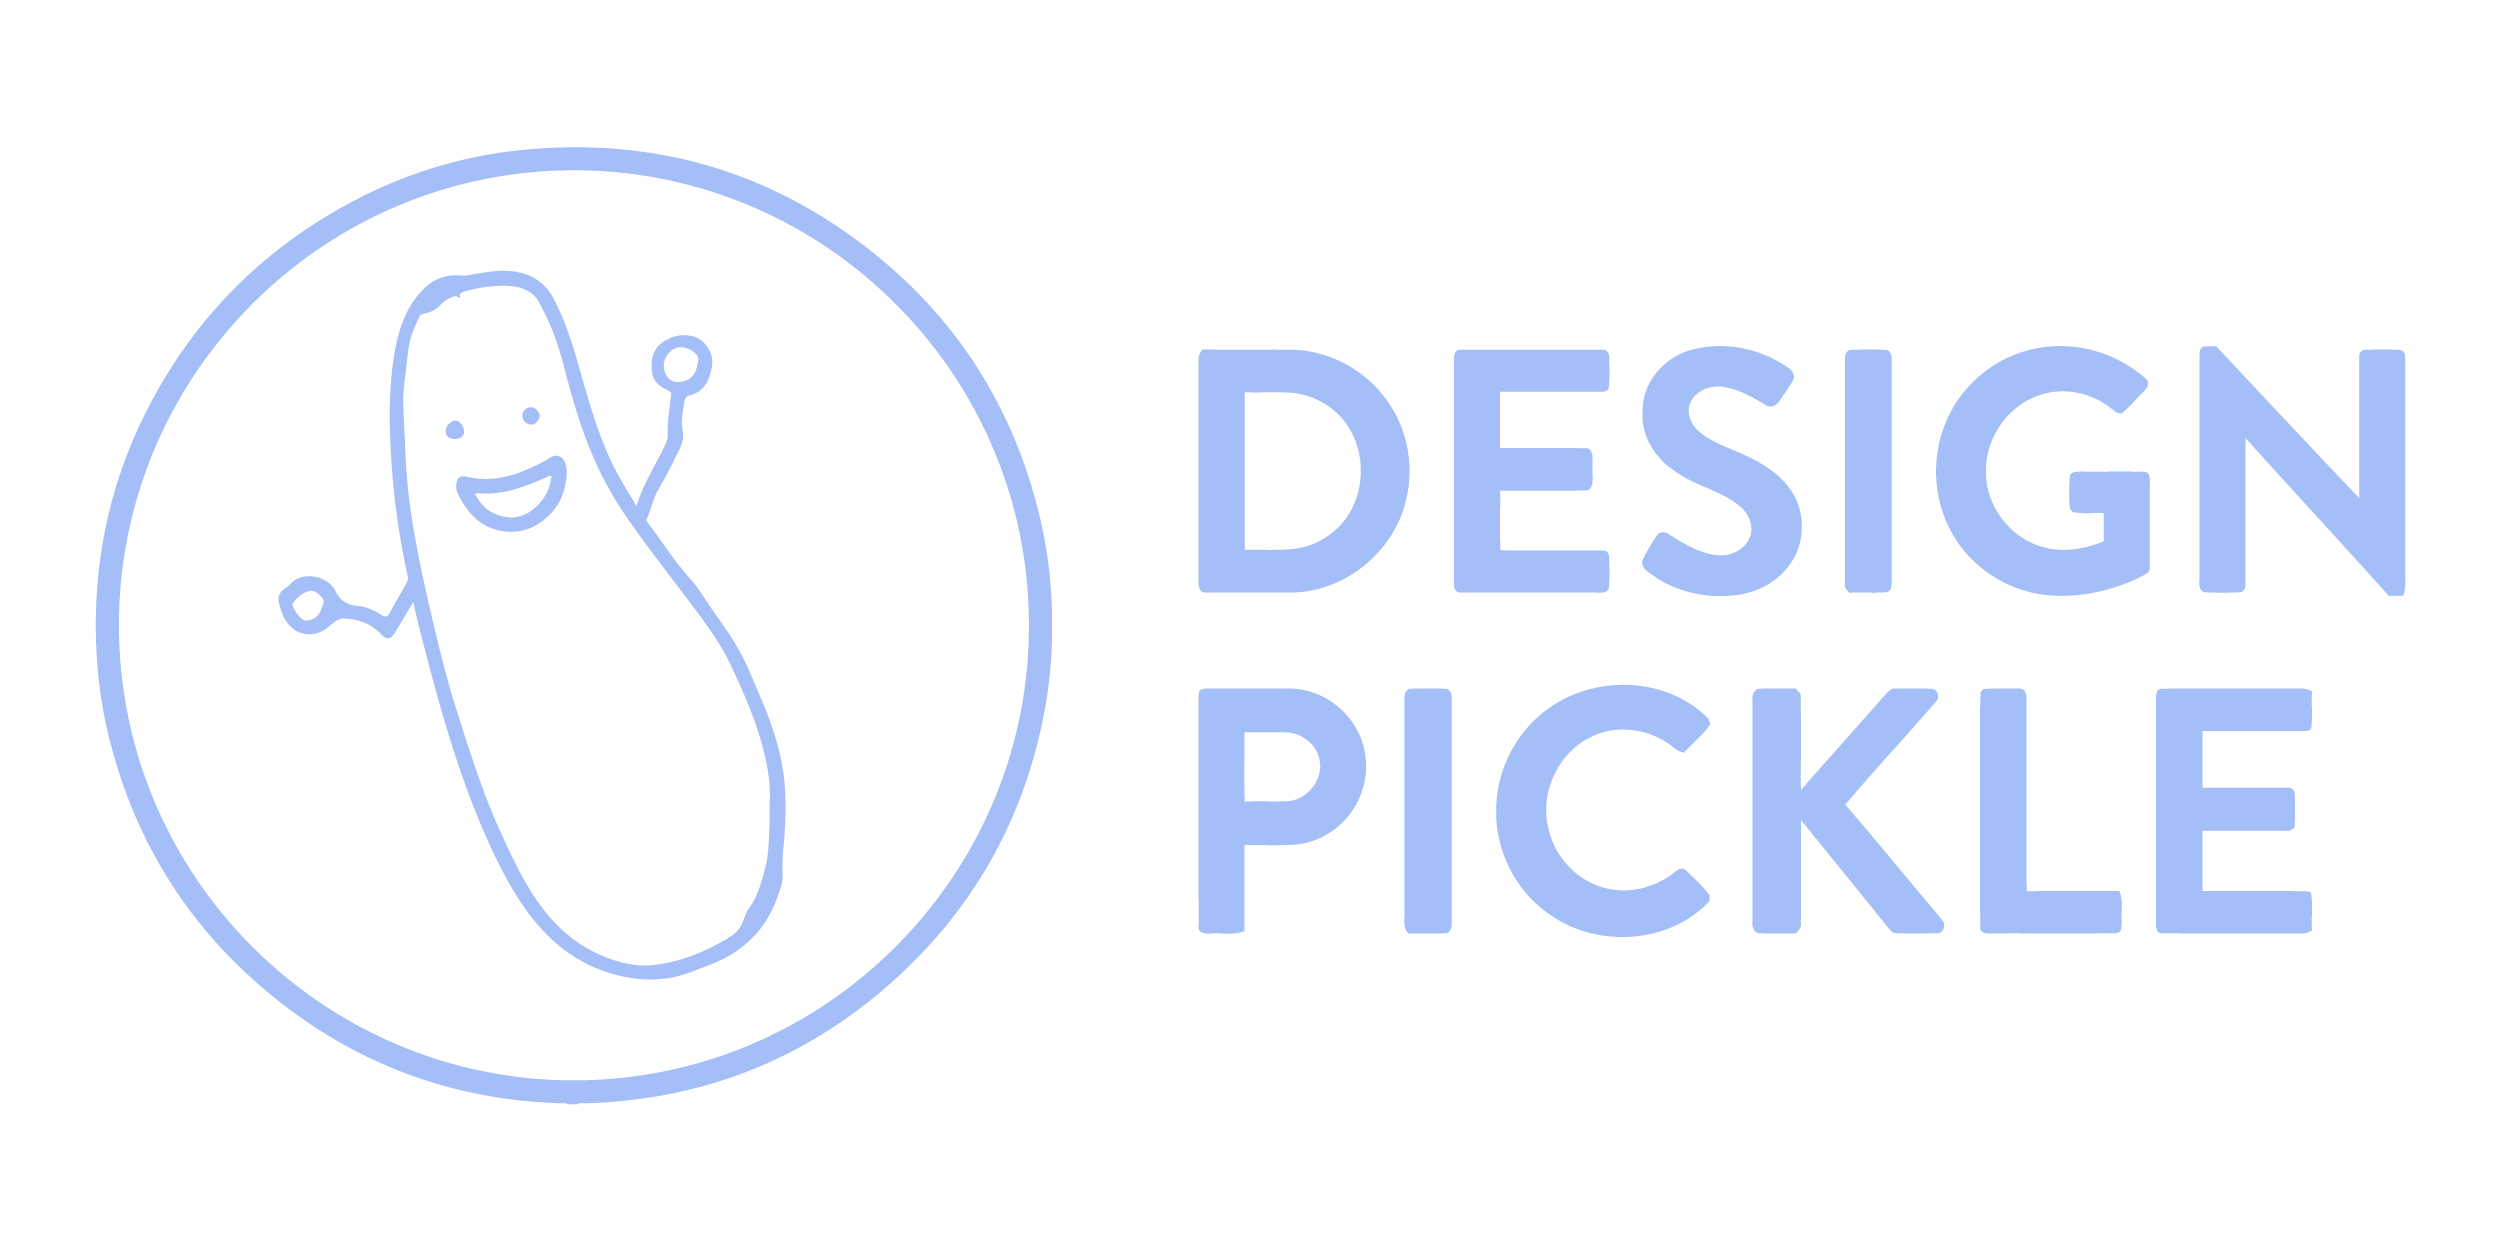 OpenComp-CustomerLogos-Ube_Design Pickle